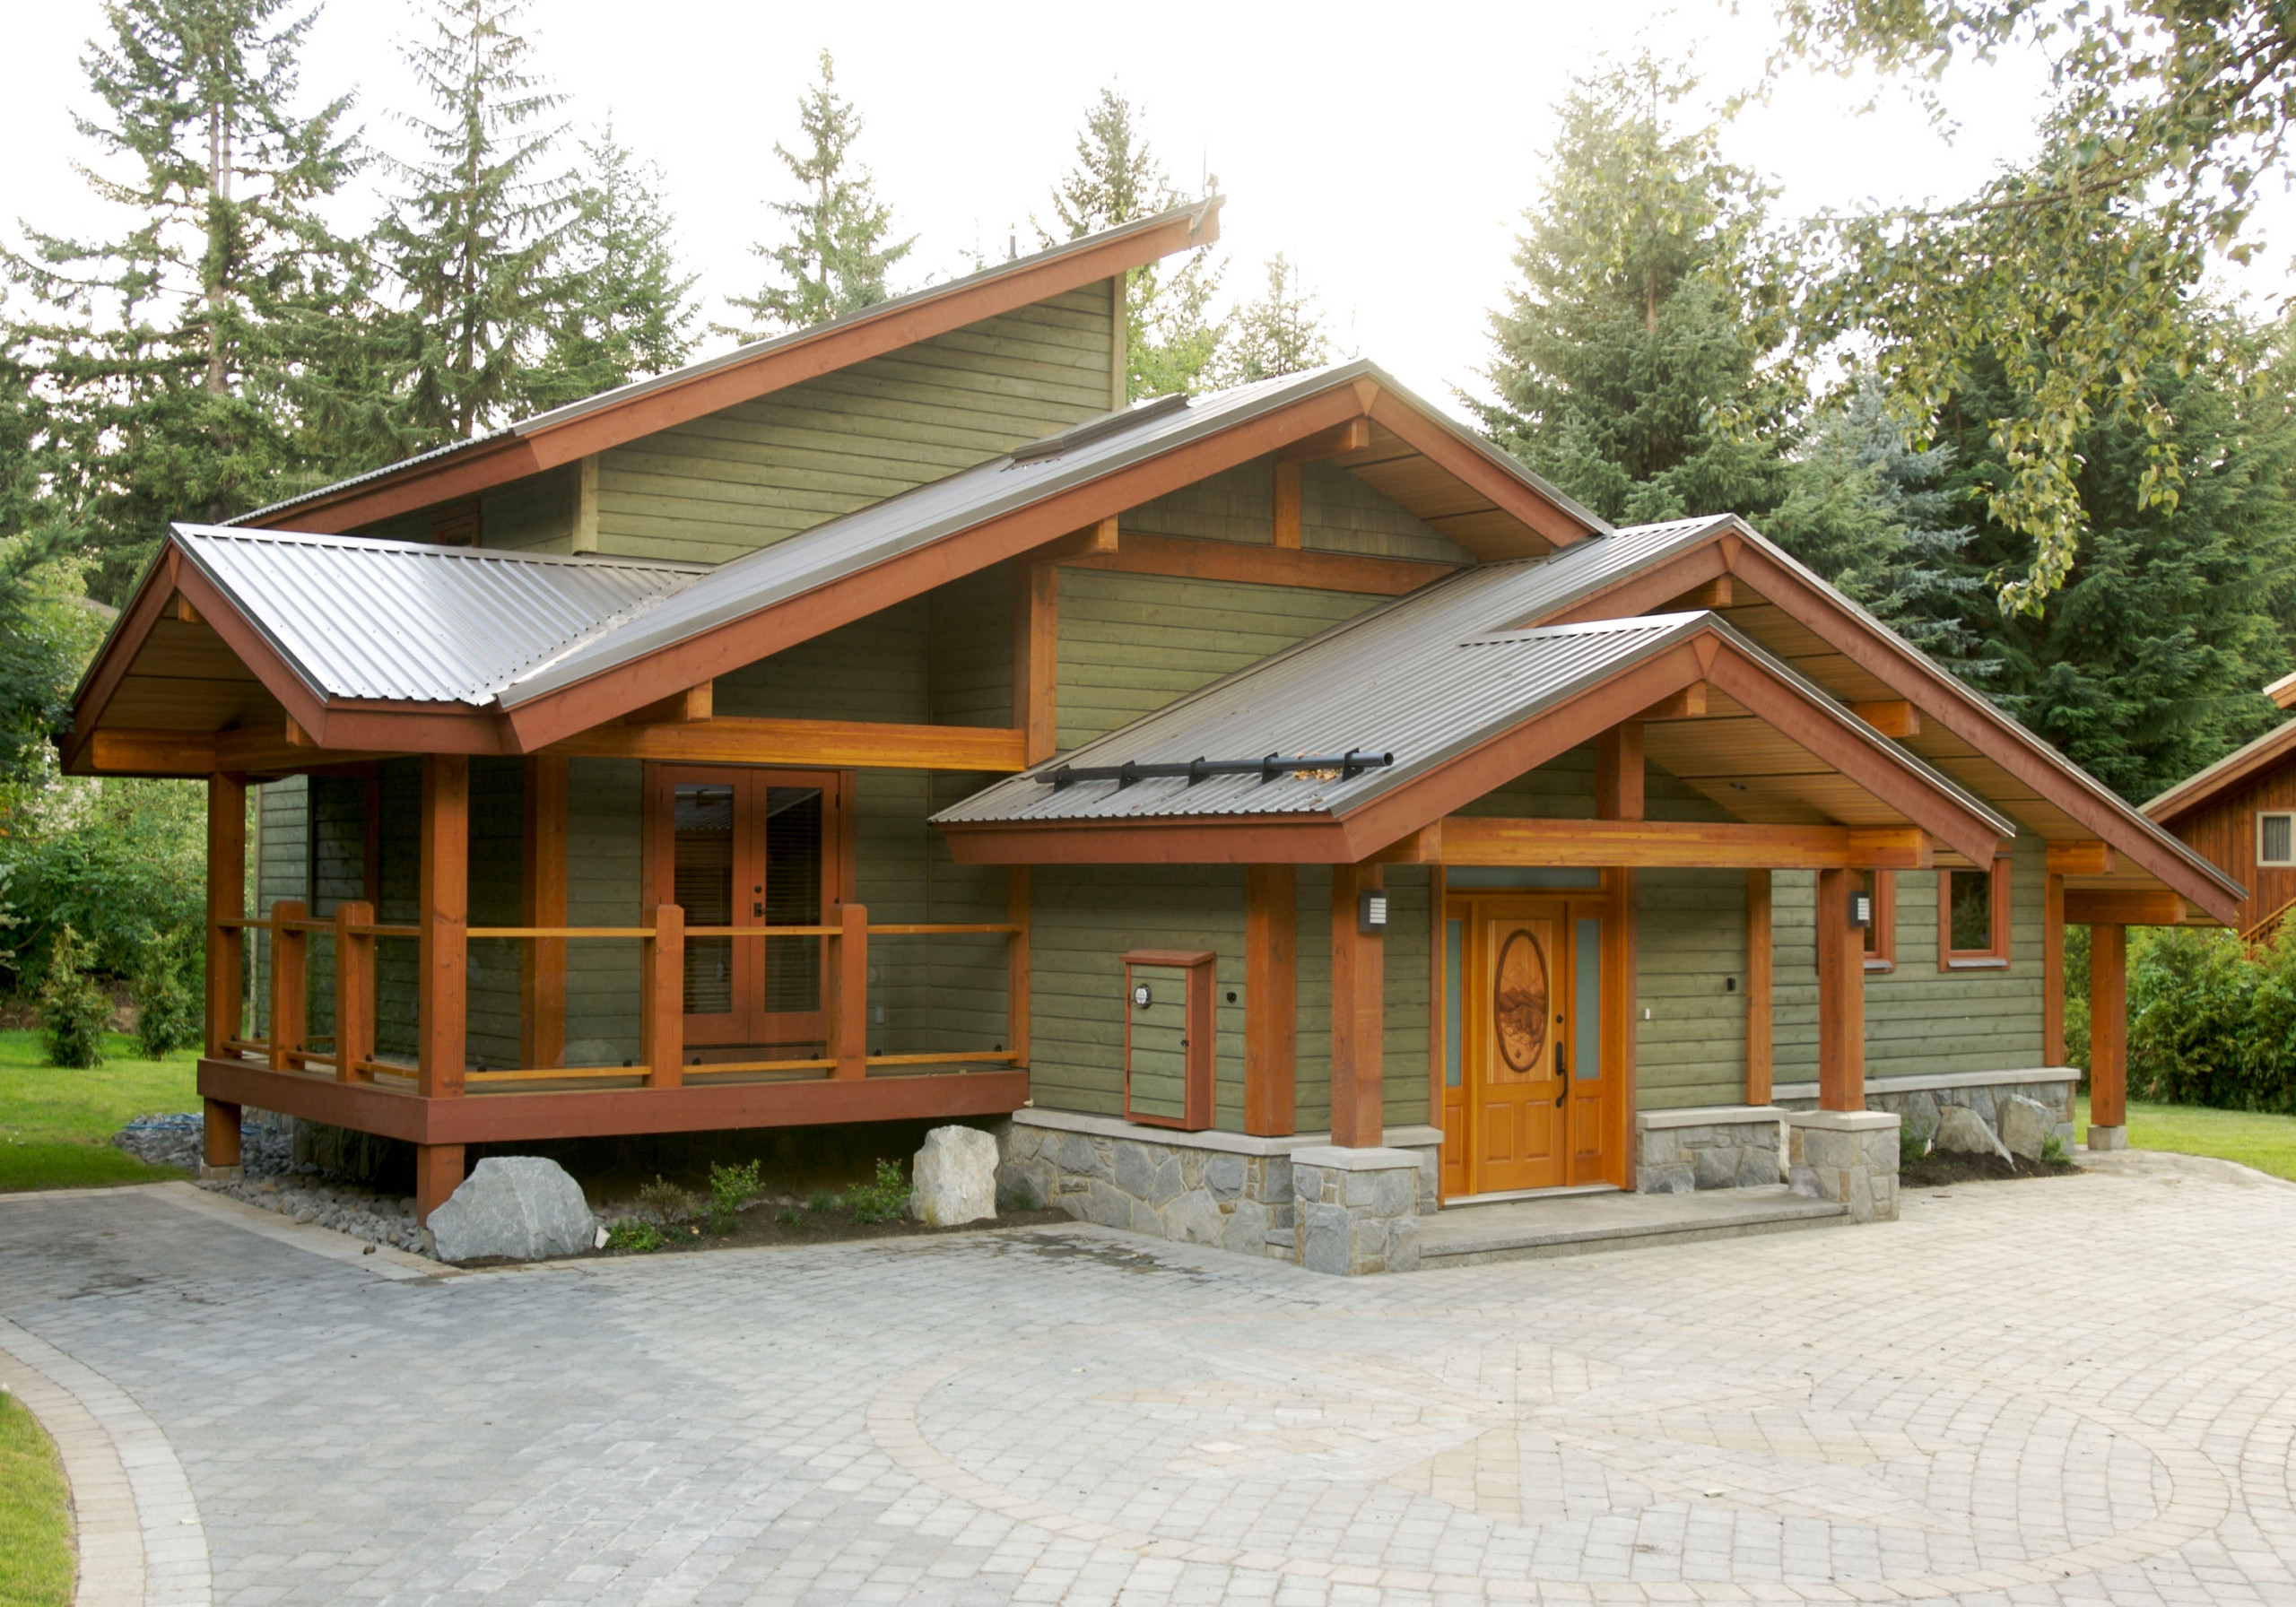 75 Modern Green Exterior Home Ideas You'll Love - October, 2023